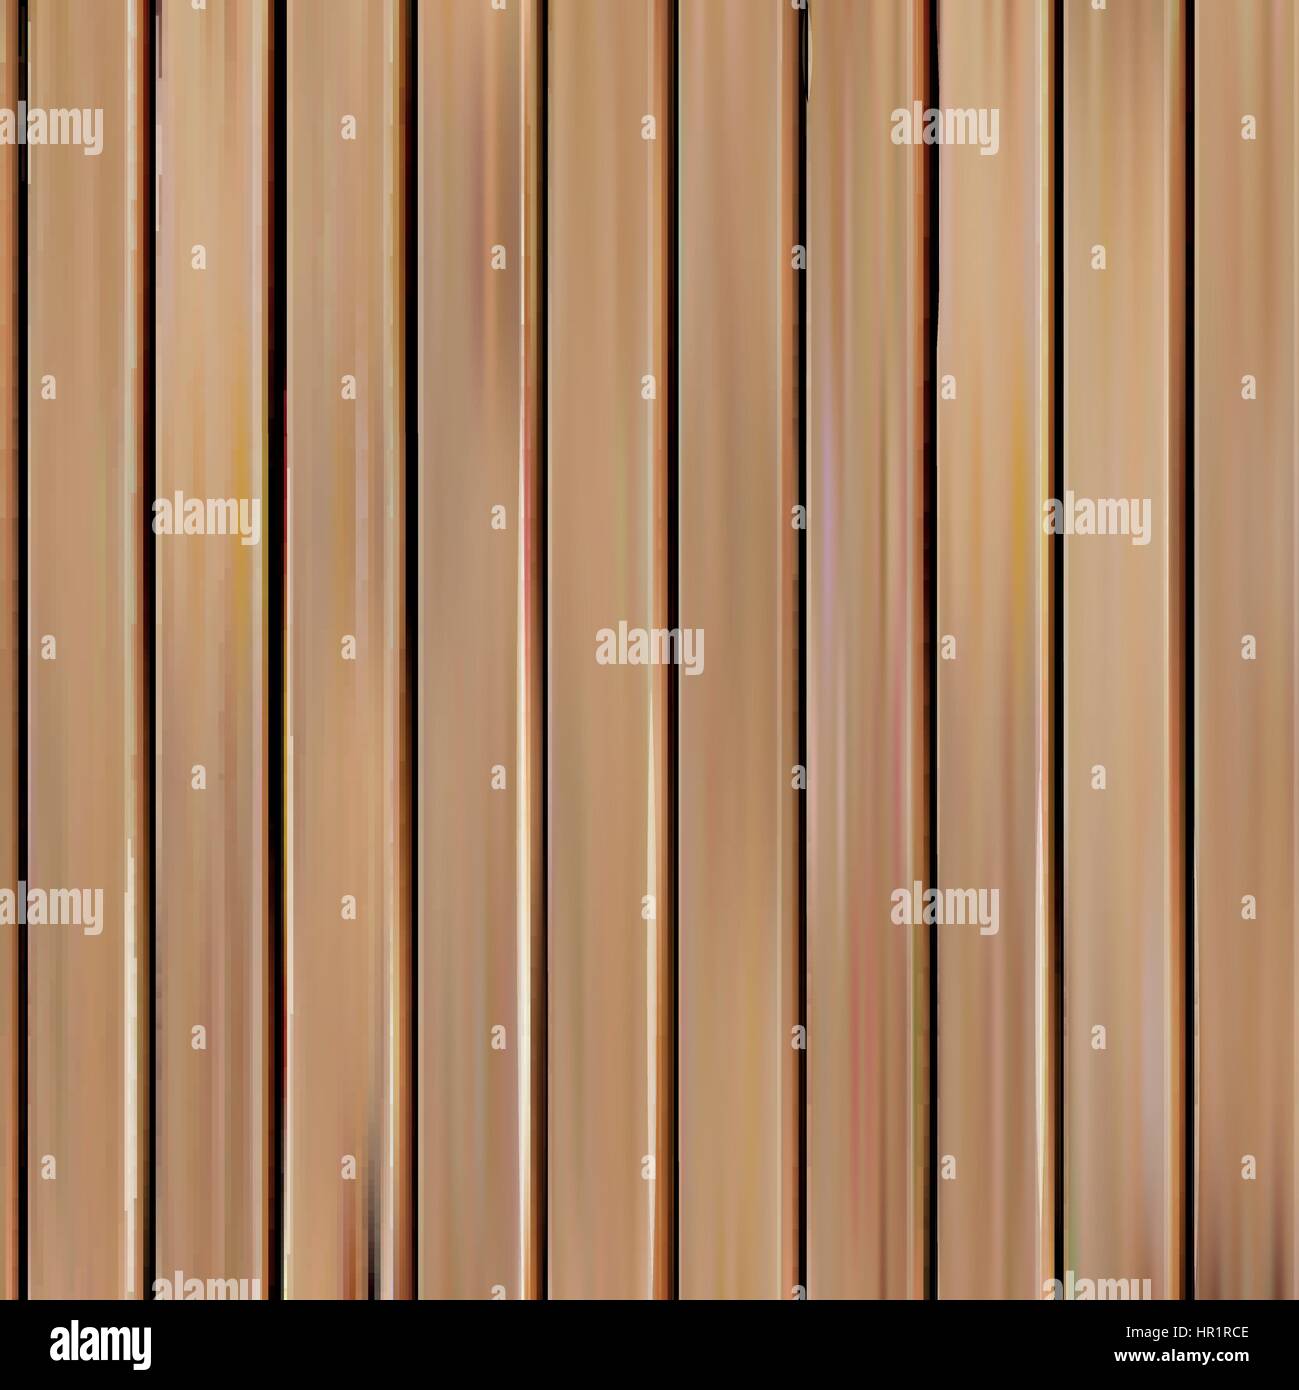 Realistische nahtlose Holz Textur-Vektor-Illustration, senkrechten Bretter Hintergrund isoliert. Stock Vektor